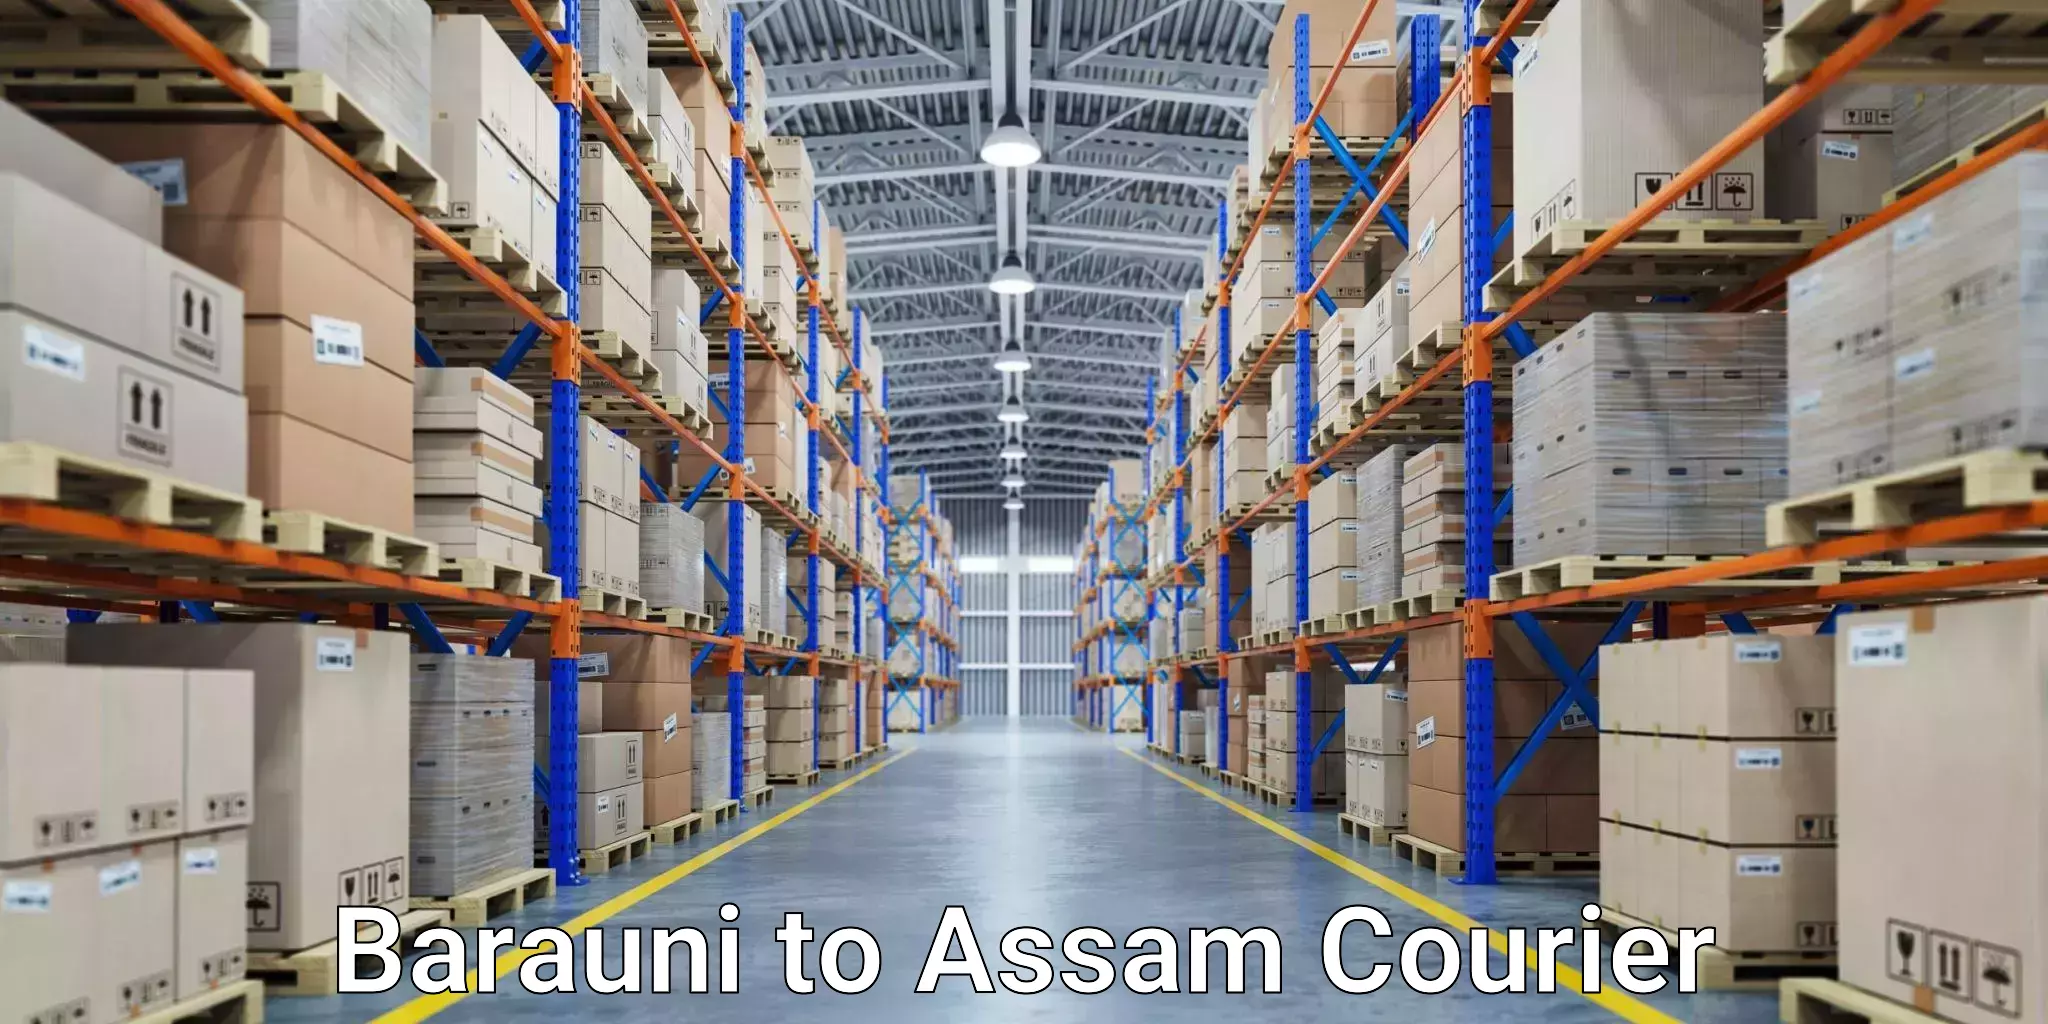 Courier service comparison Barauni to Assam